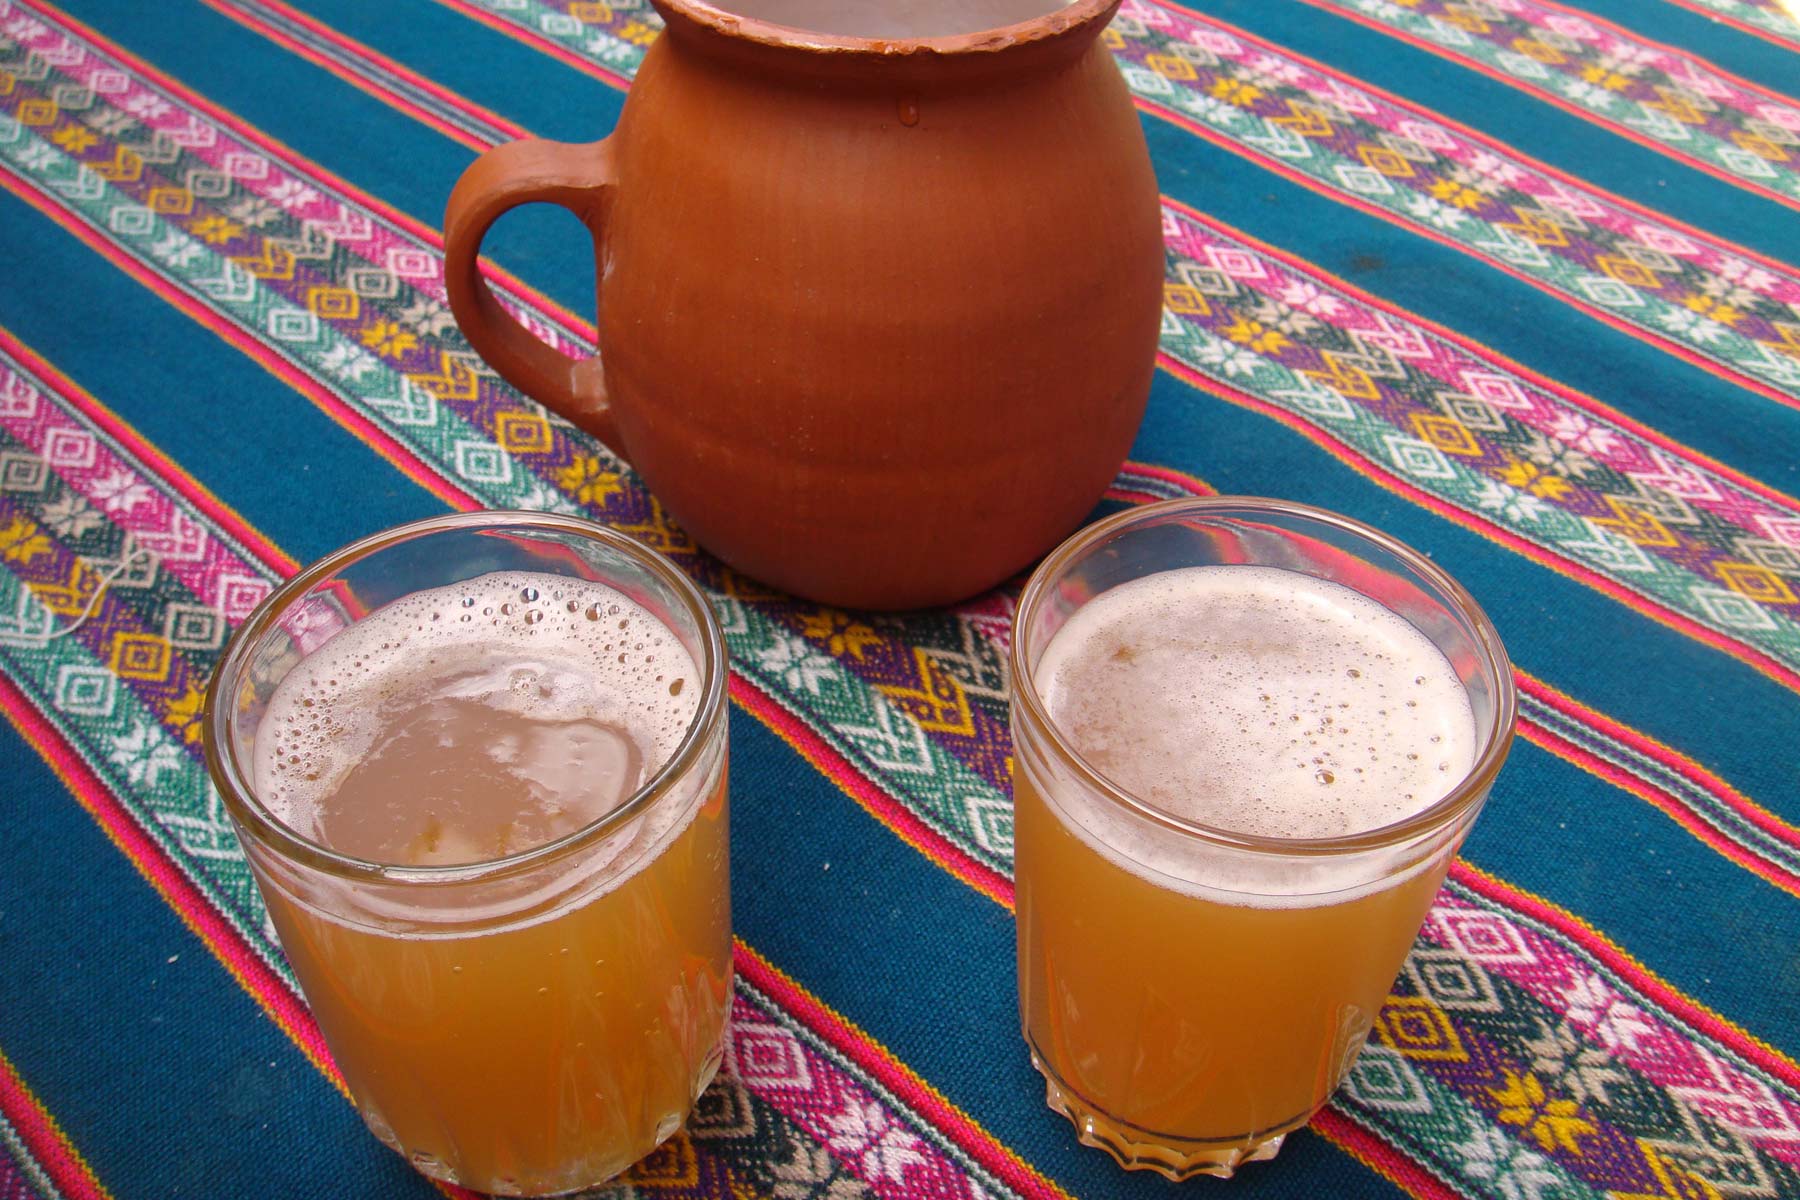 drinks in Peru, Peruvian drinks, non alcoholic drinks in peru, alcoholic drinks in peru, peru drinks, traditional peruvian drinks, exotic drinks in Peru,